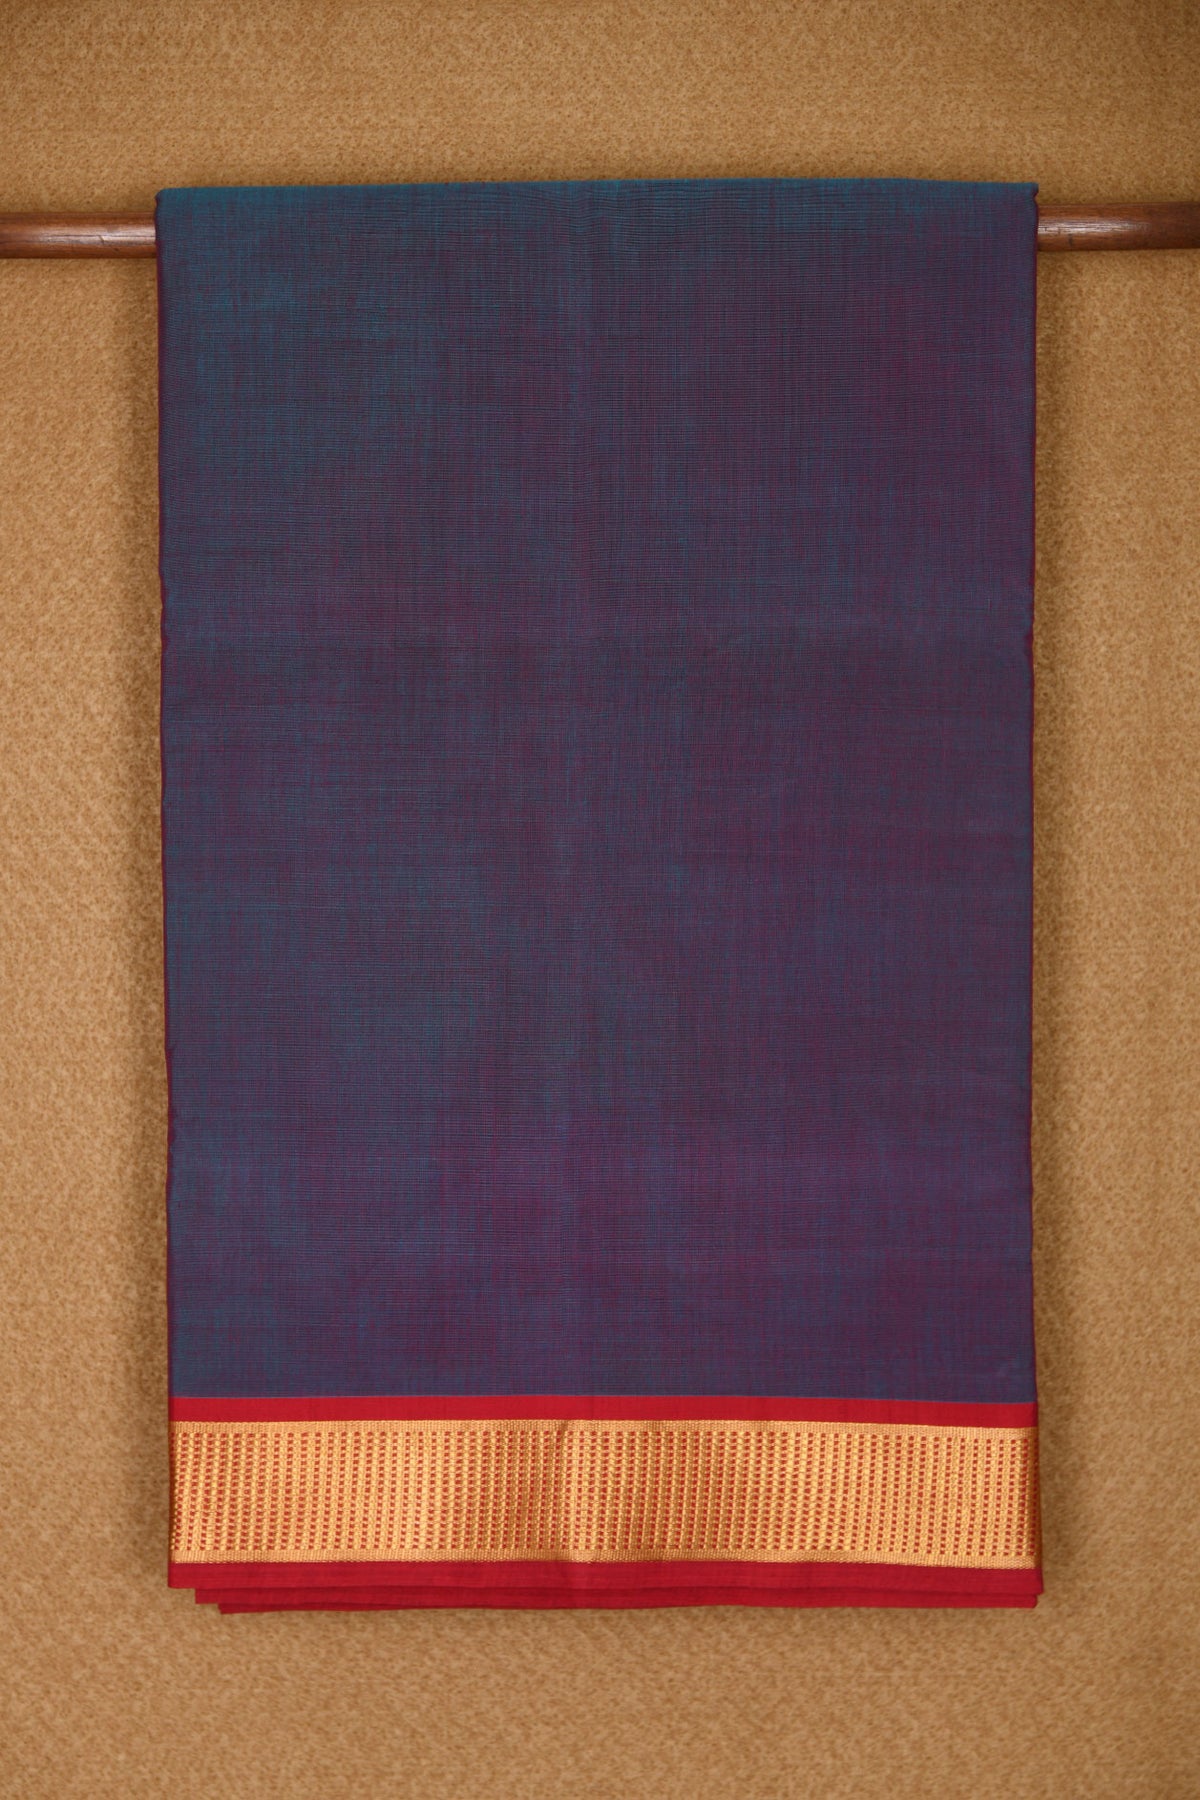 Contrast Zari Border In Plain Manthulir Color Nine Yards Silk Cotton Saree